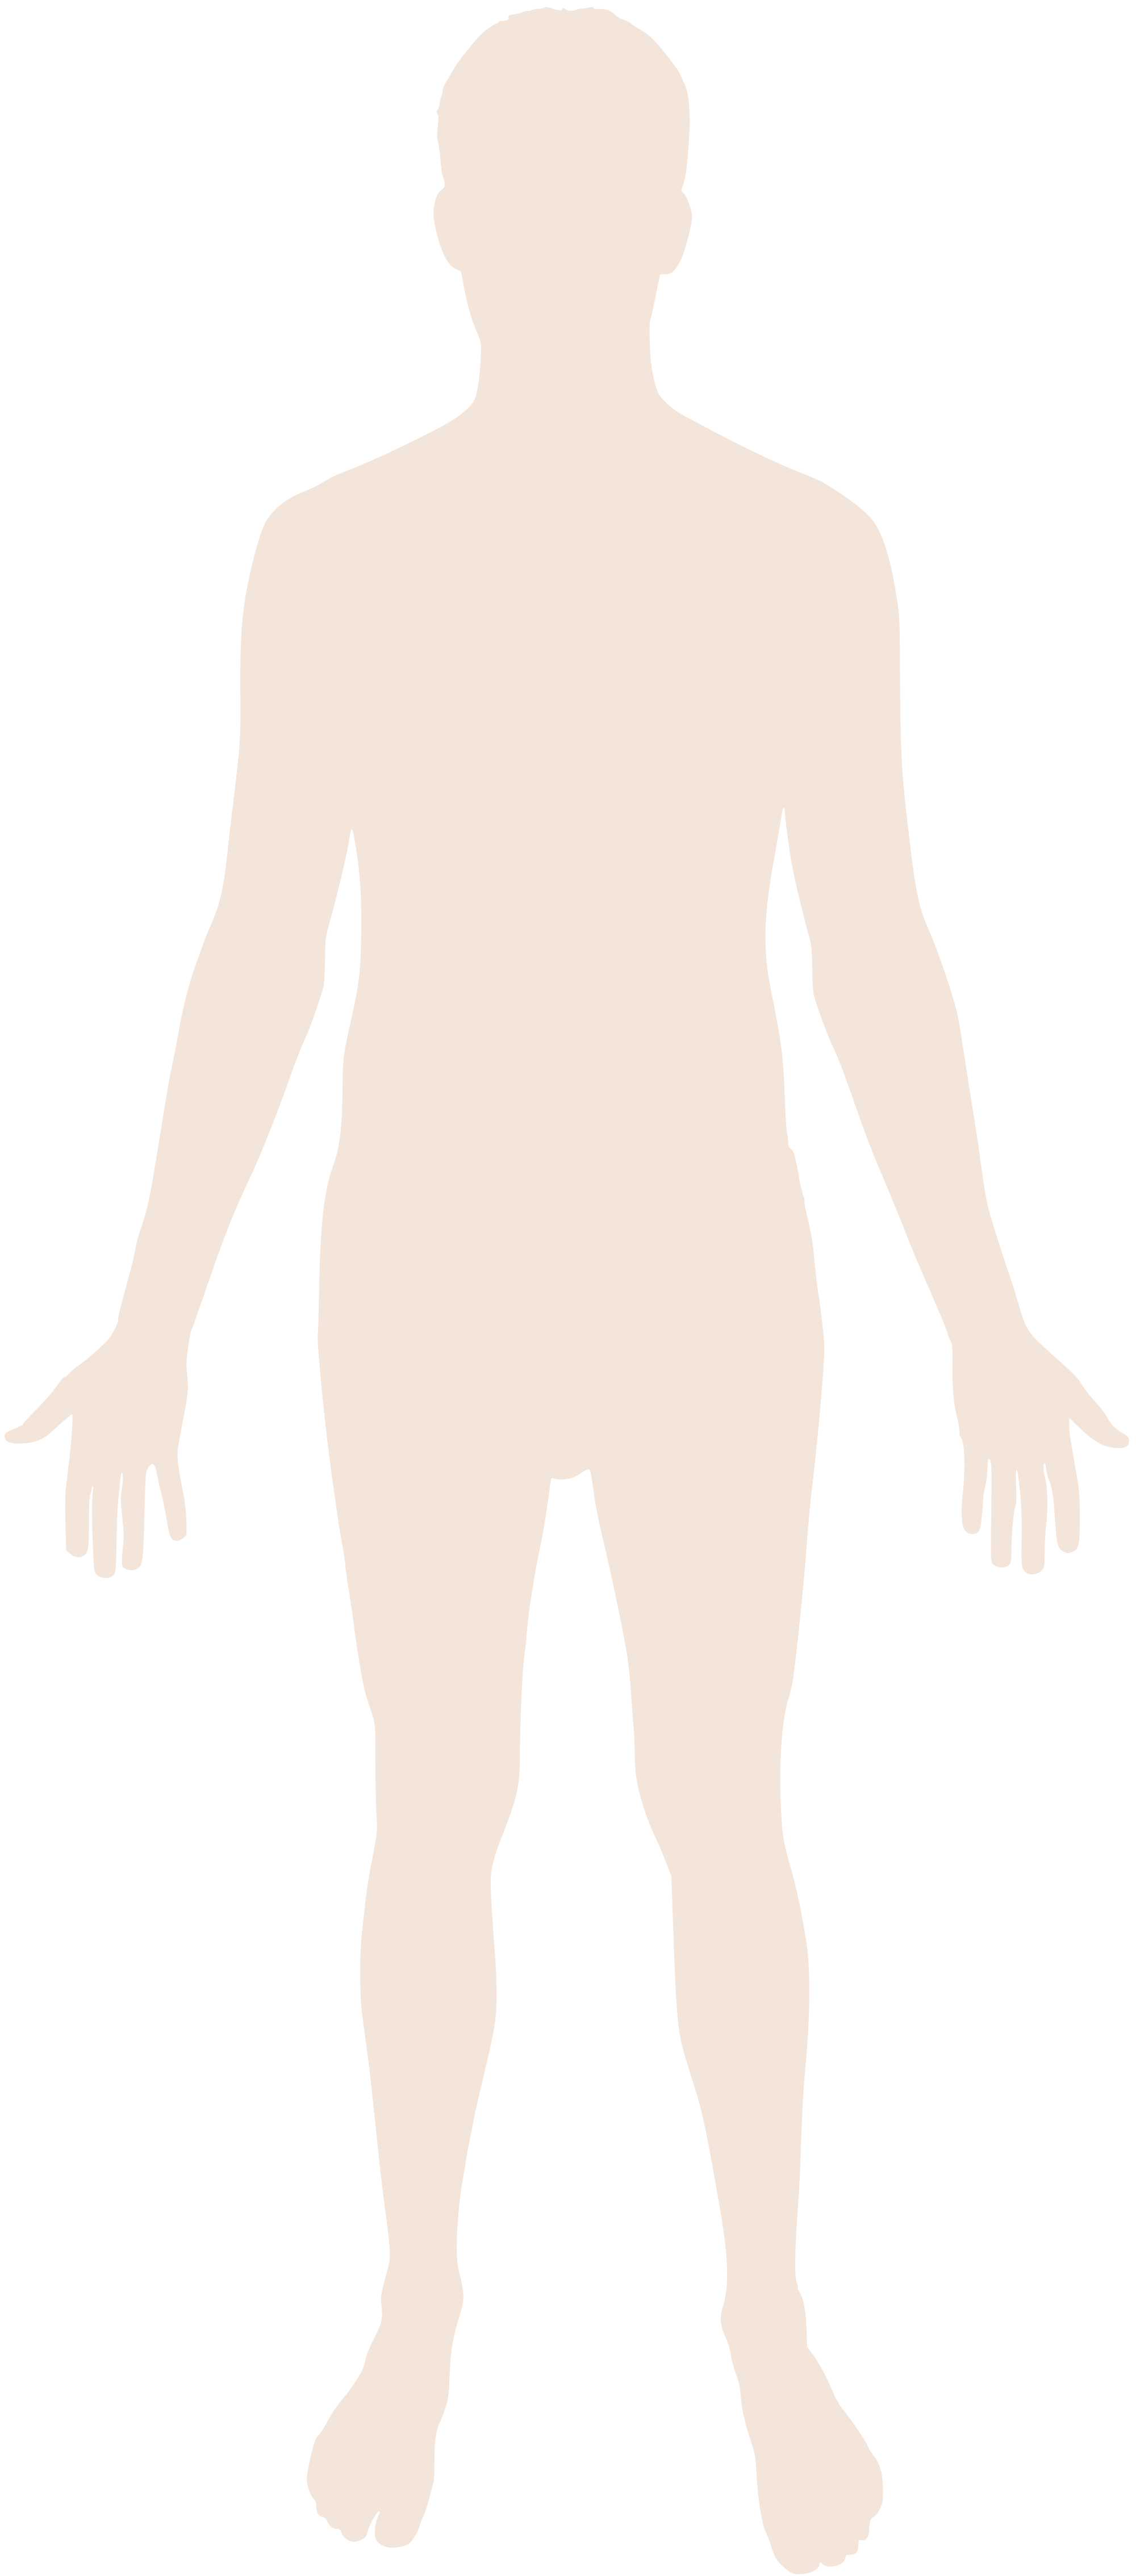 File:Human body silhouette.svg - Wikimedia Commons